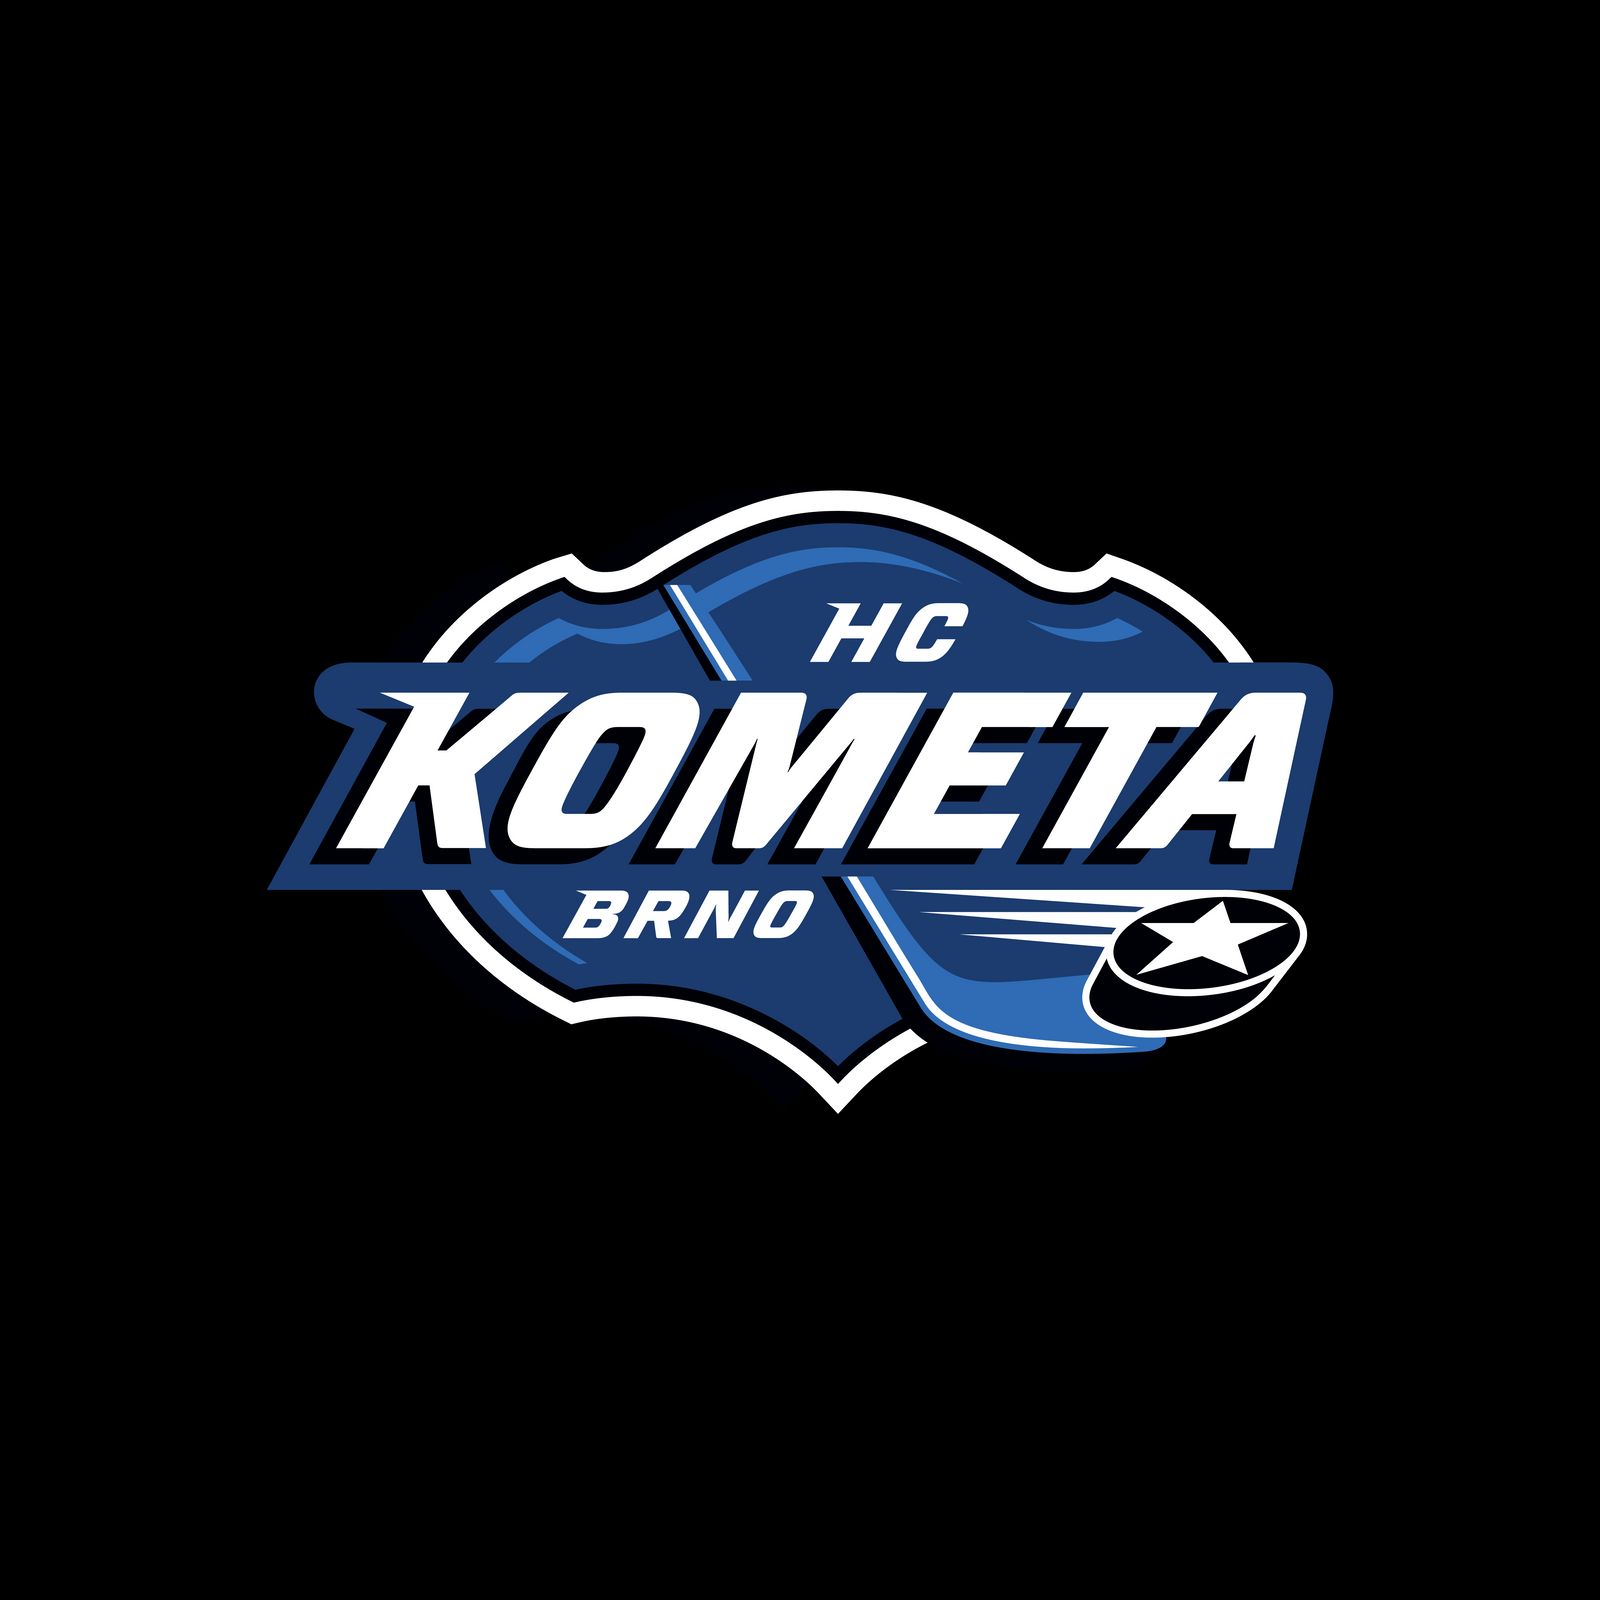 HC Kometa Brno - logo